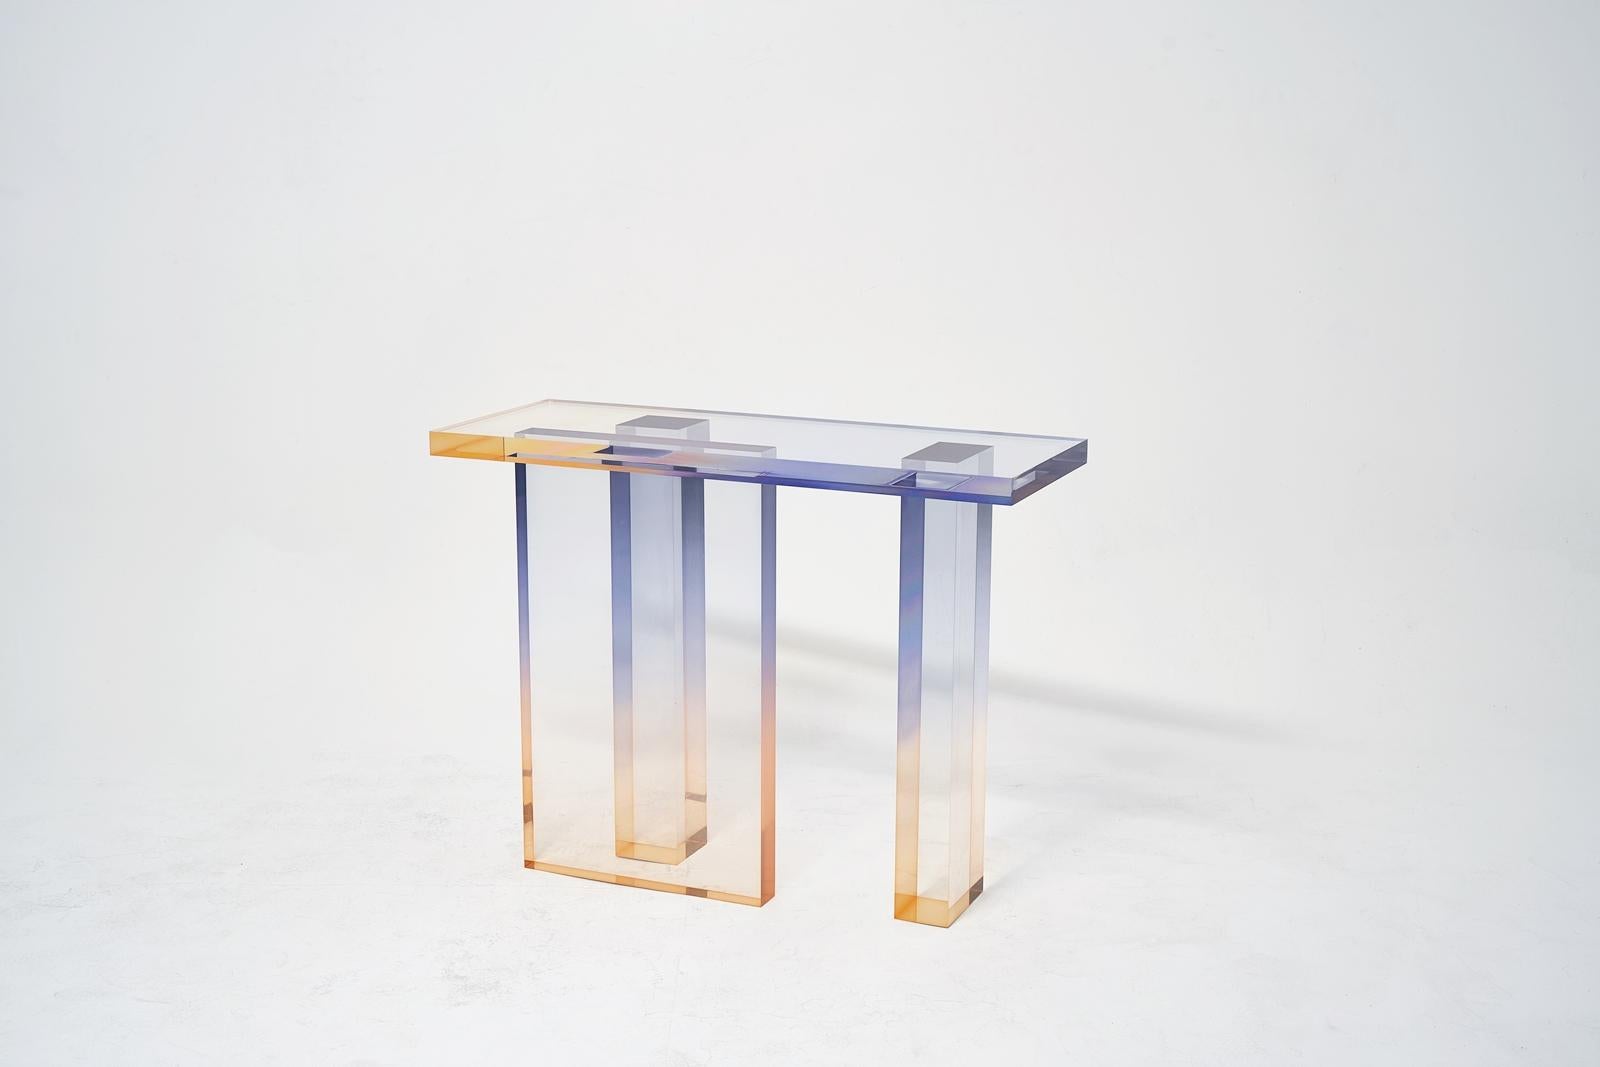 crystal table